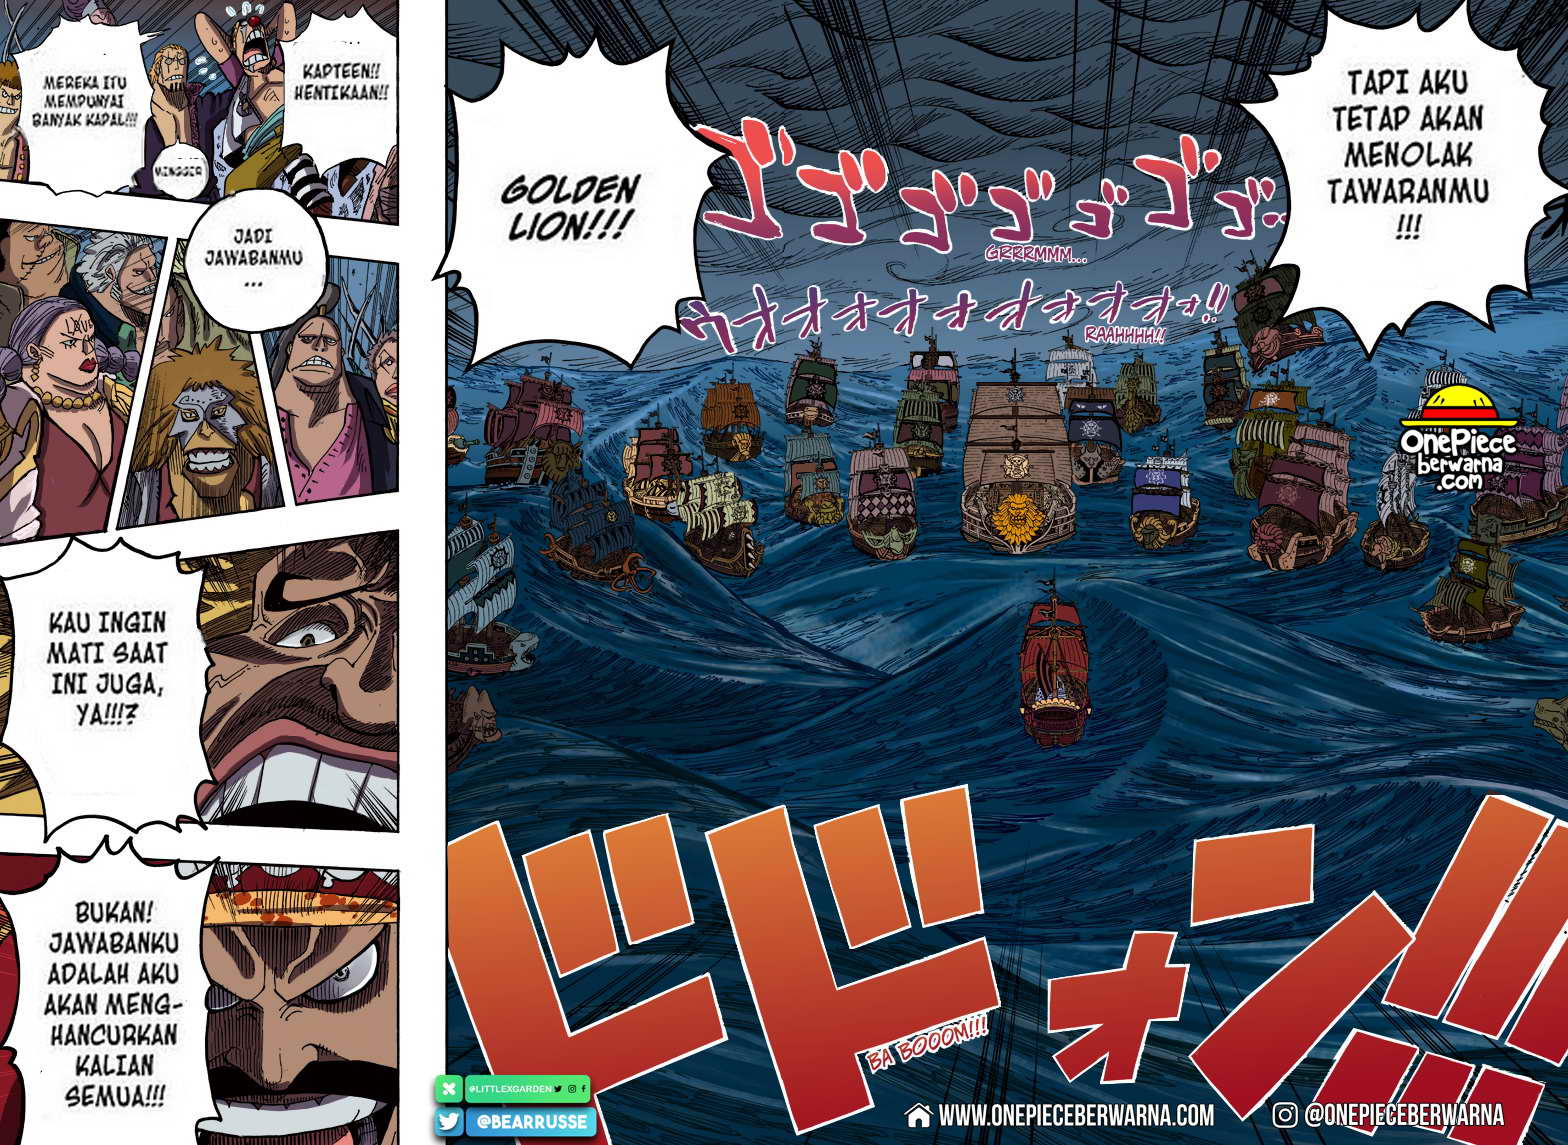 One Piece Berwarna Chapter 000 Strong World